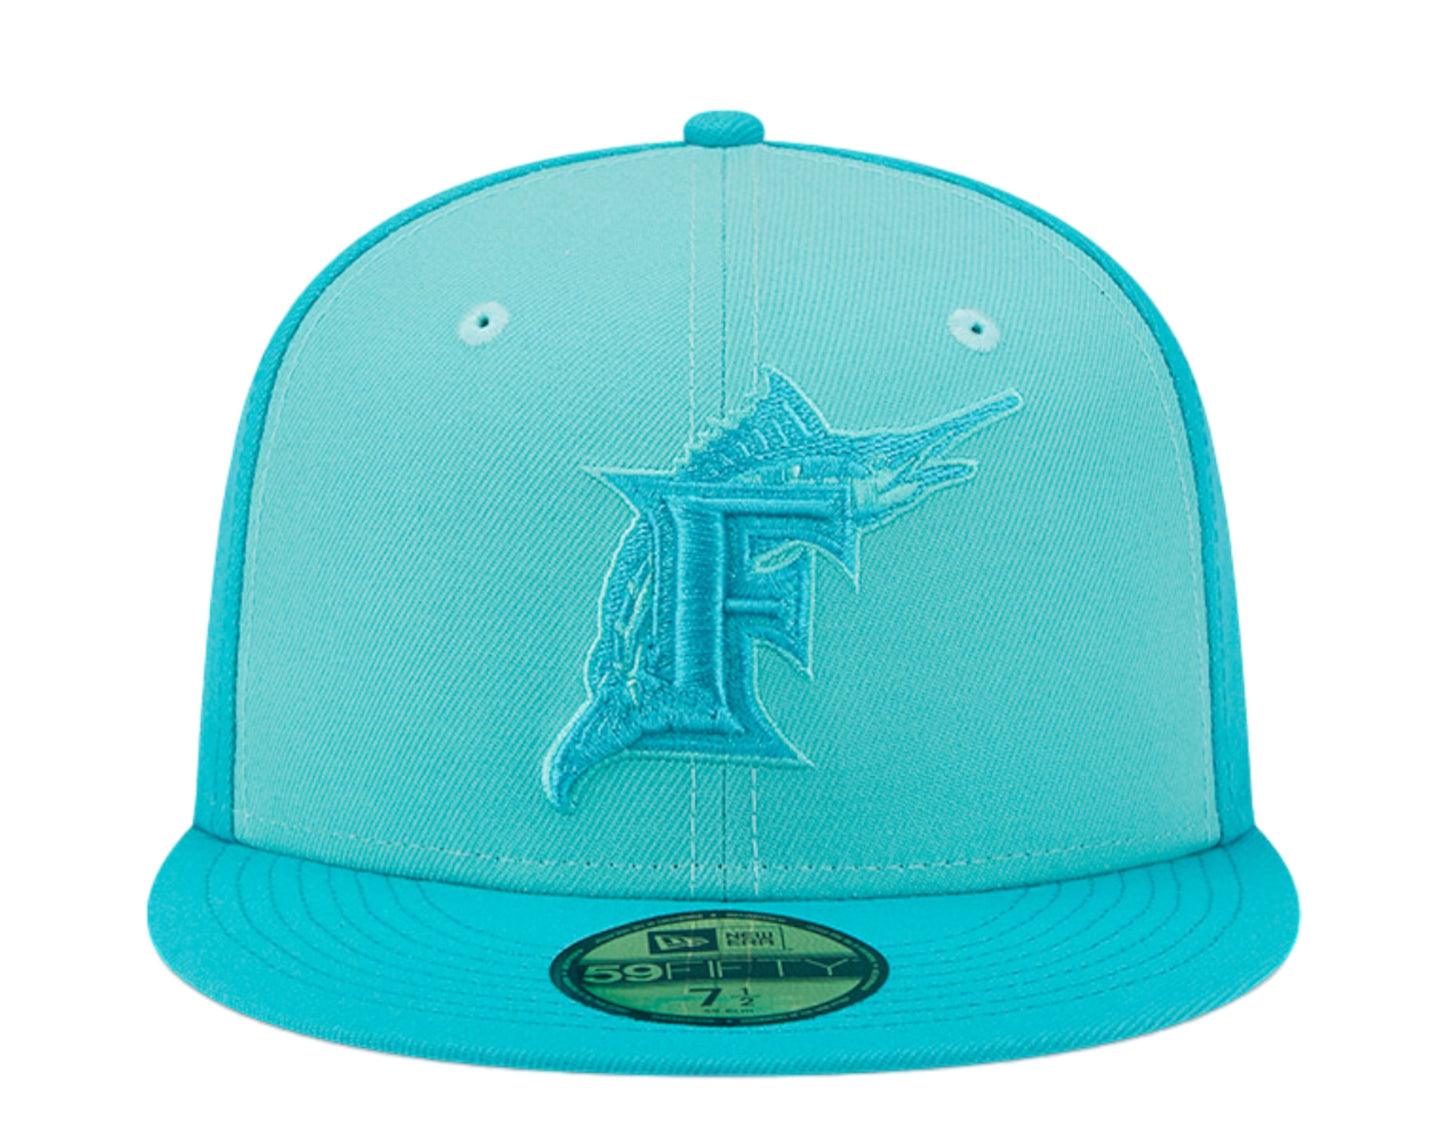 New Era 59Fifty MLB Miami Marlins Tri-Tone Team Fitted Hat